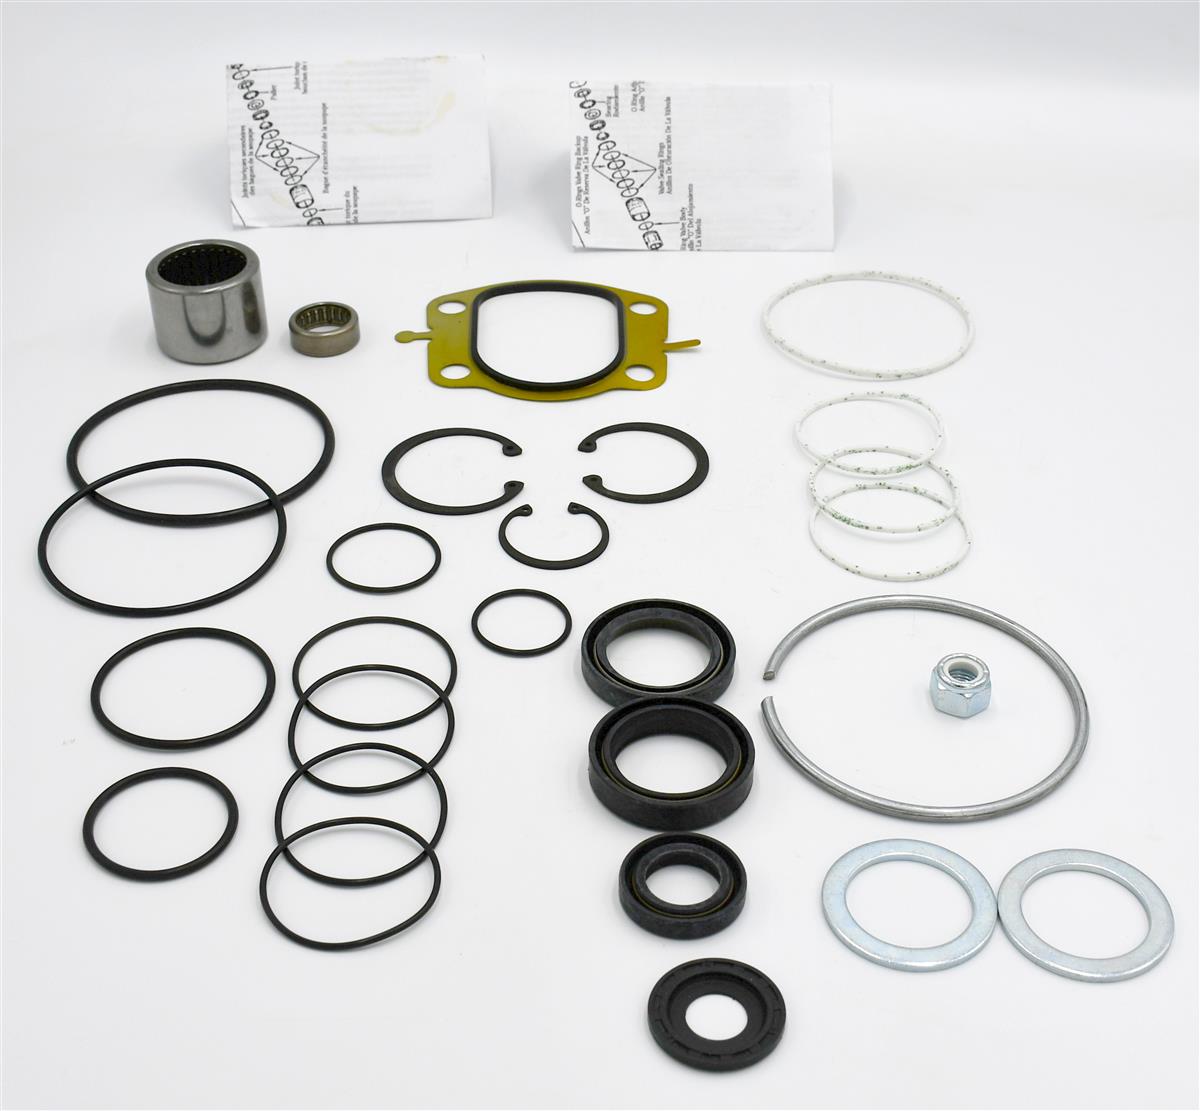 HM-3760 | HM-3760 Edelmann 8524 Power Steering Gear Box Complete Re-Seal Kit HMMWV (9).JPG